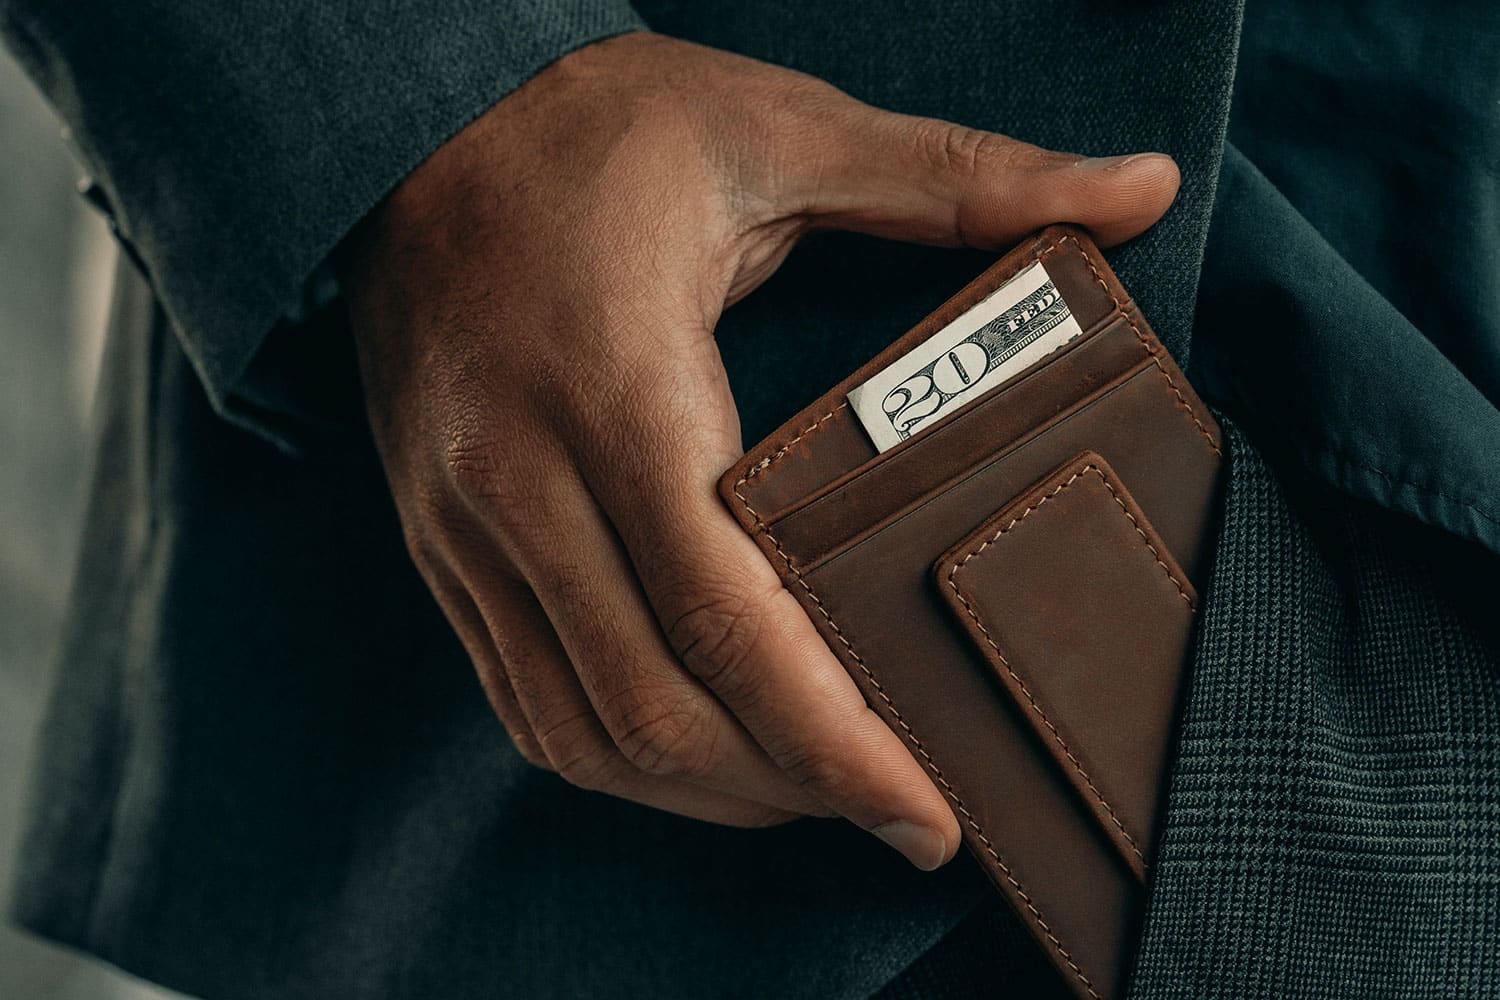 man wearing suit holding front pocket wallet